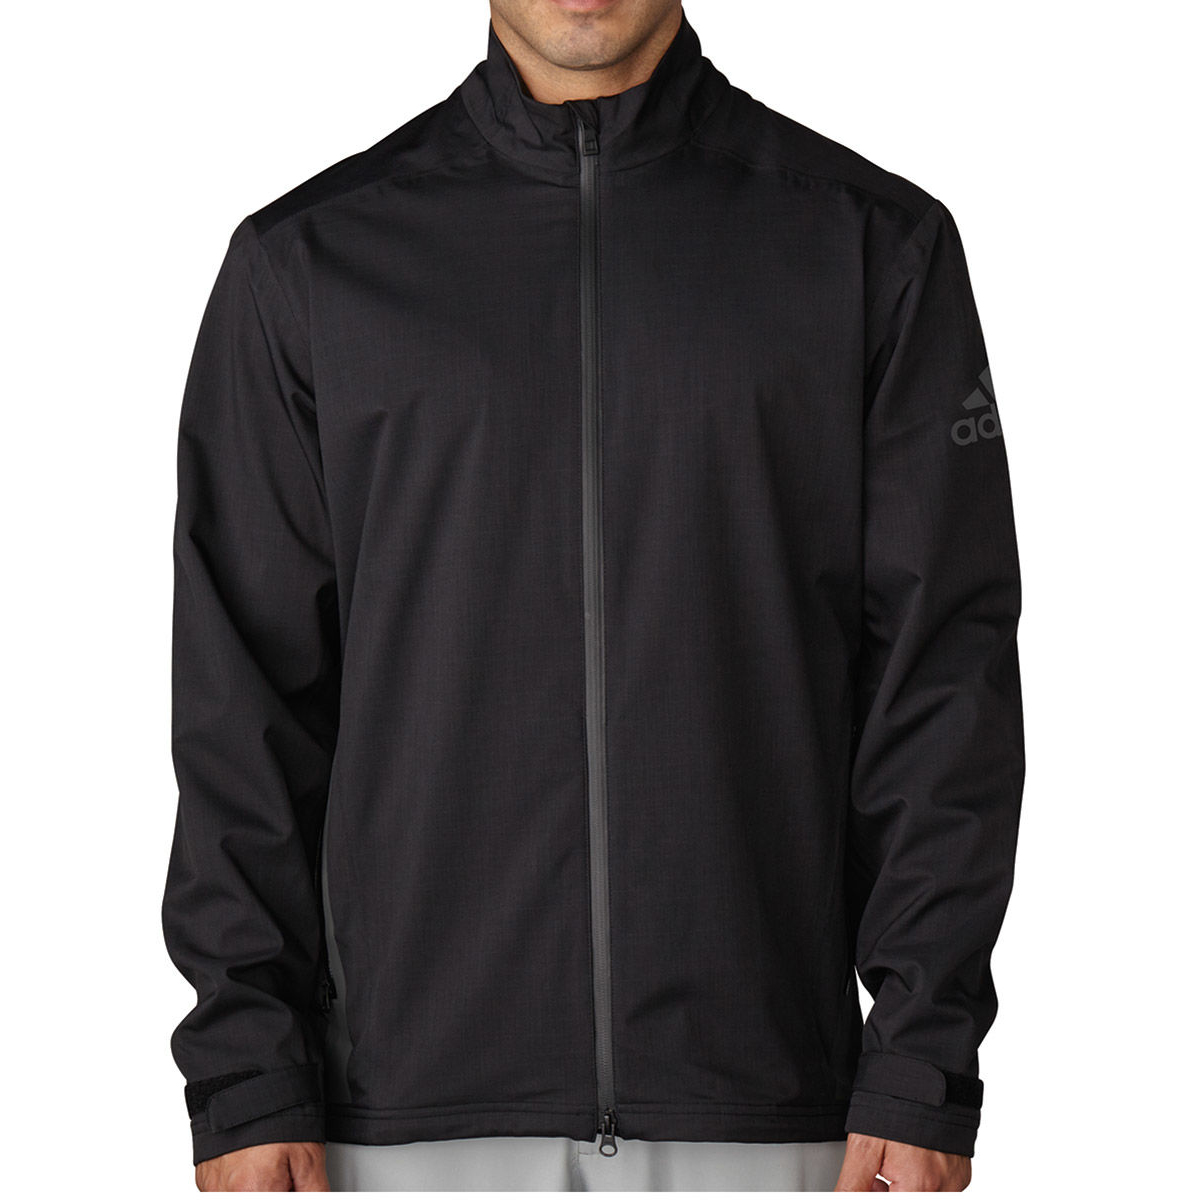 adidas waterproof jacket golf